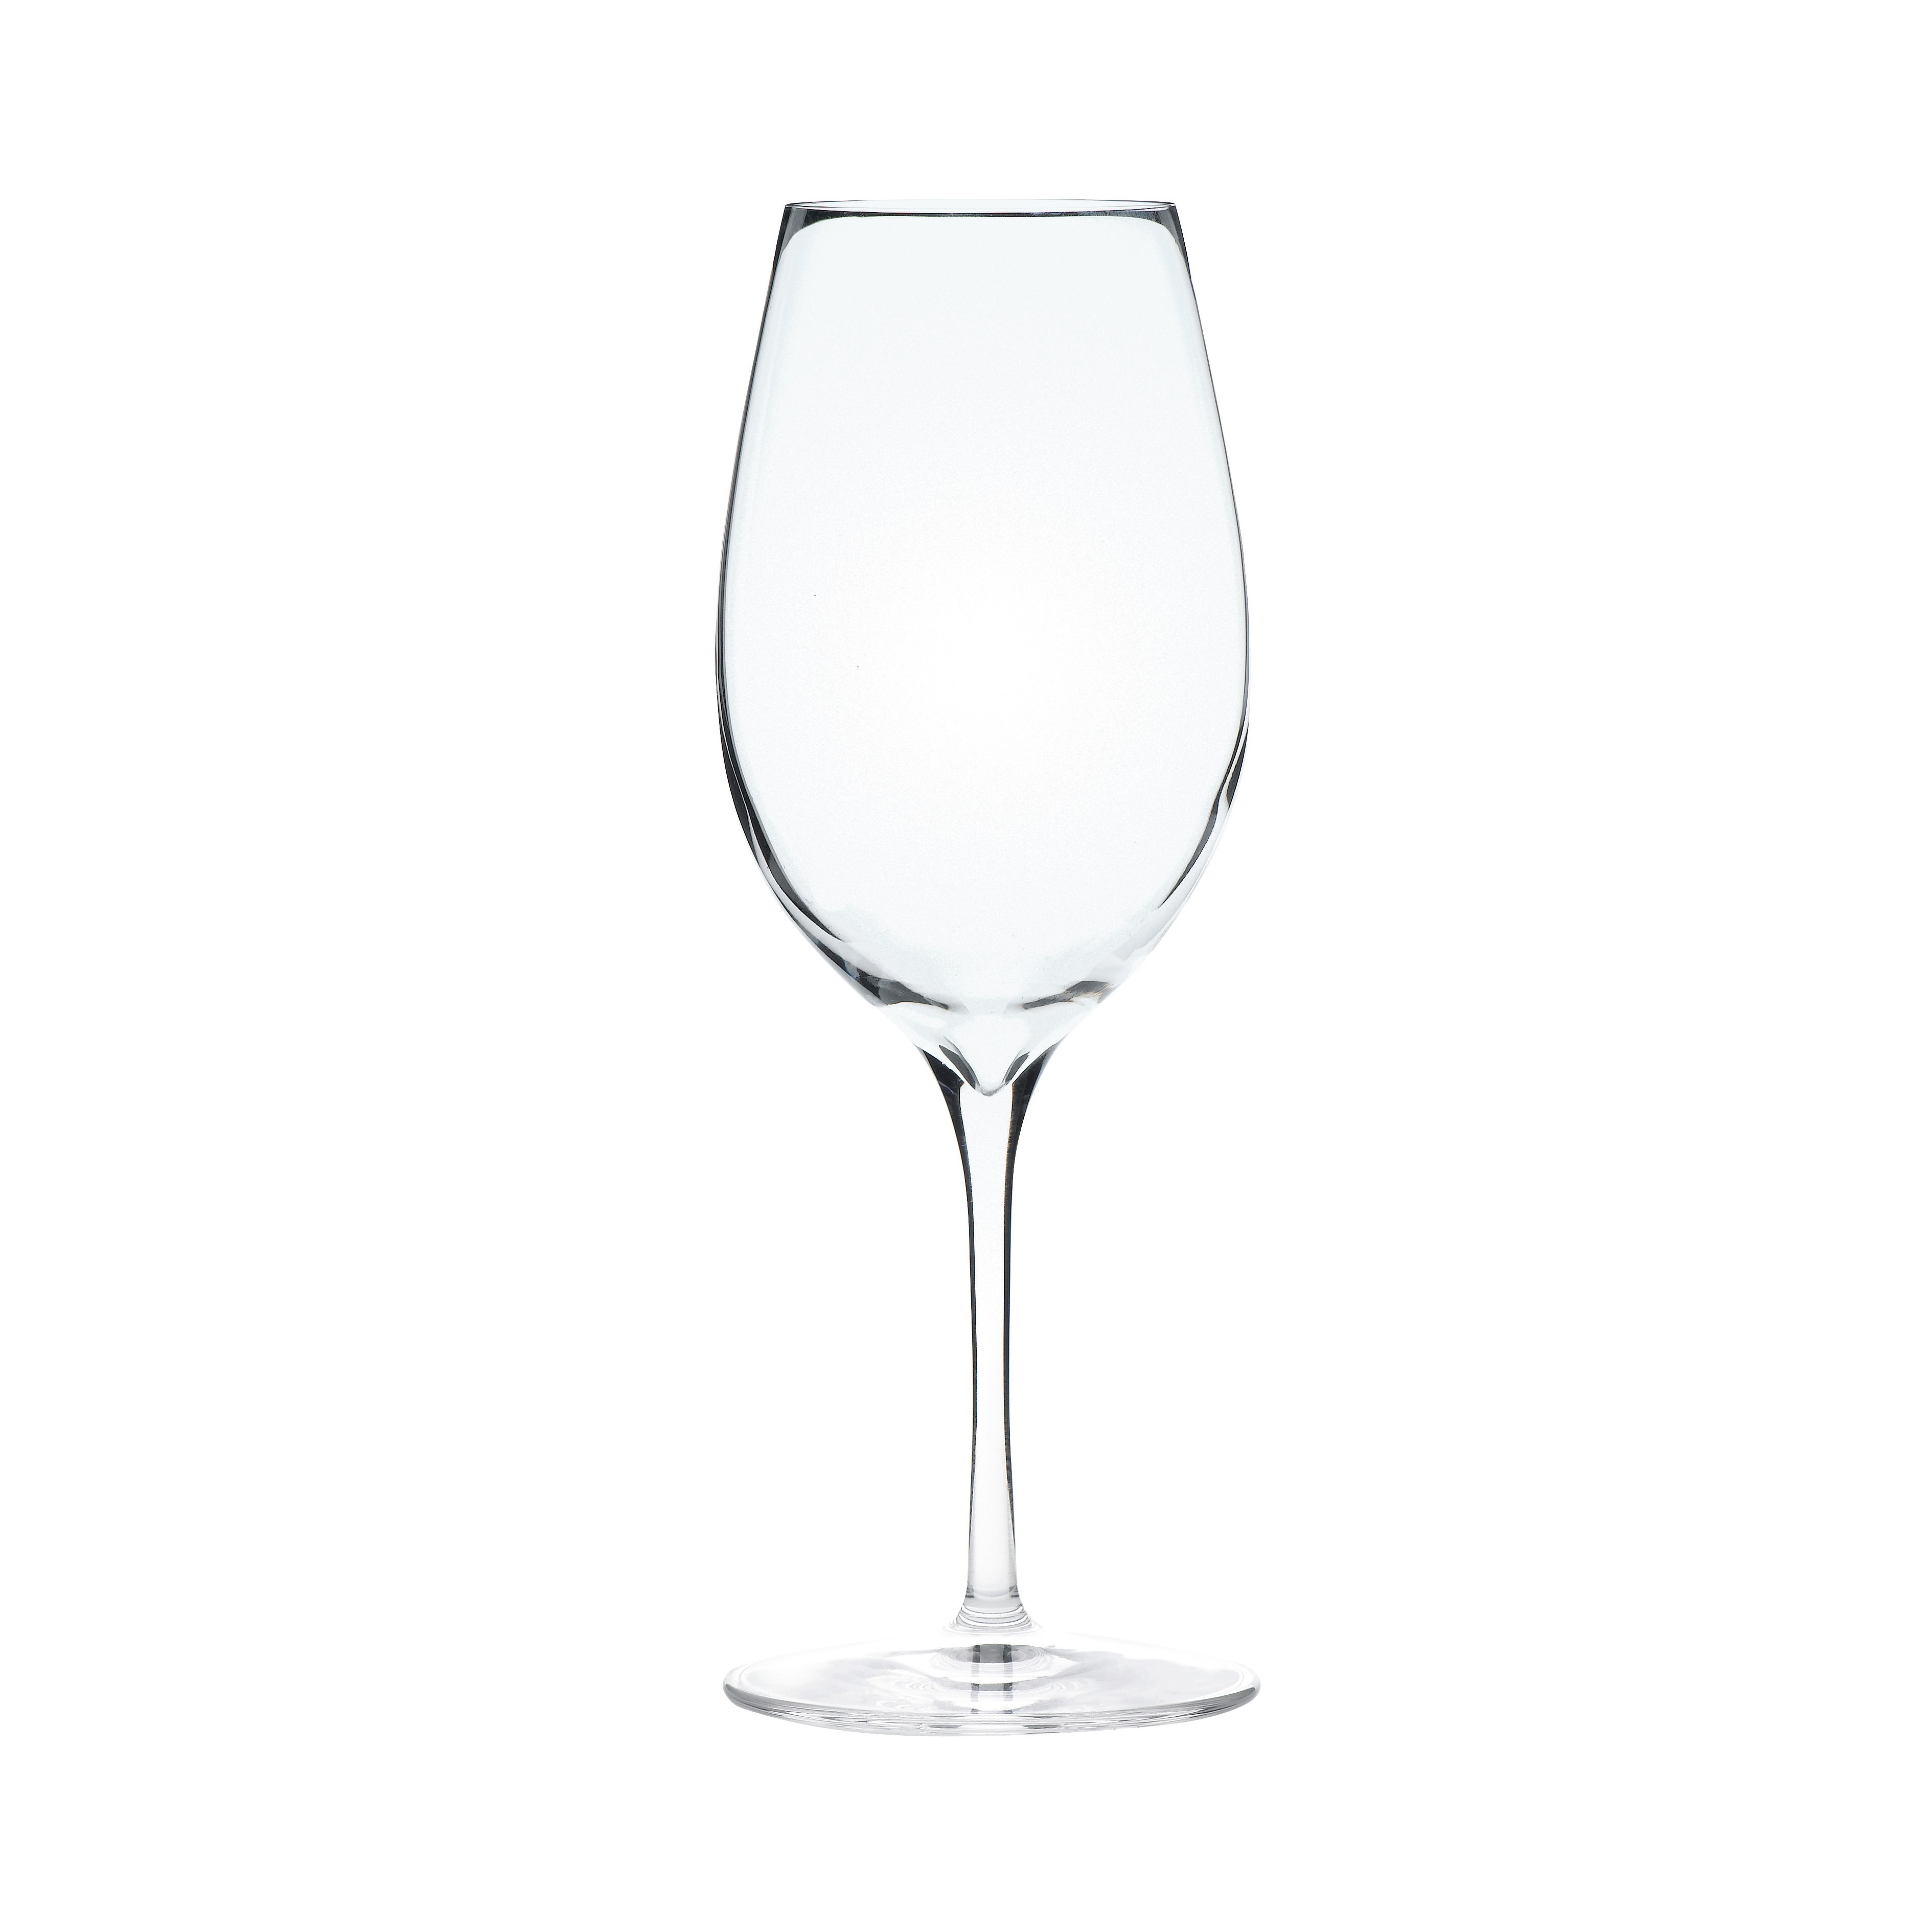 Vinoteque Smart Tester Wine Glass 14oz / 40cl 